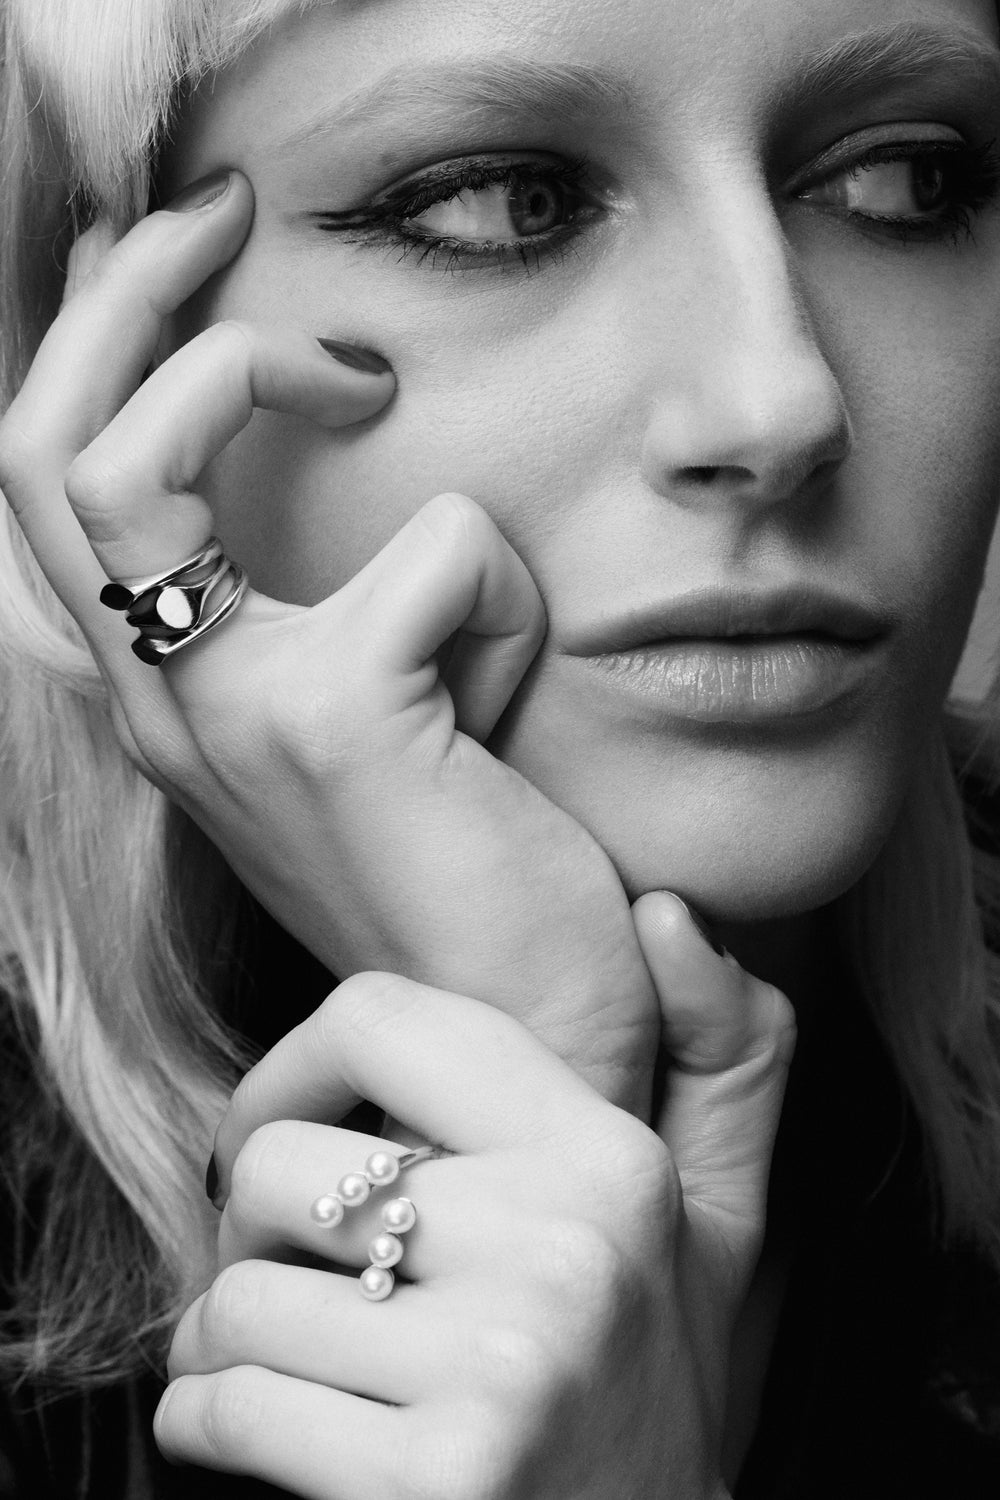 Pearl Janie Wrap Ring | Silver| Natasha Schweitzer